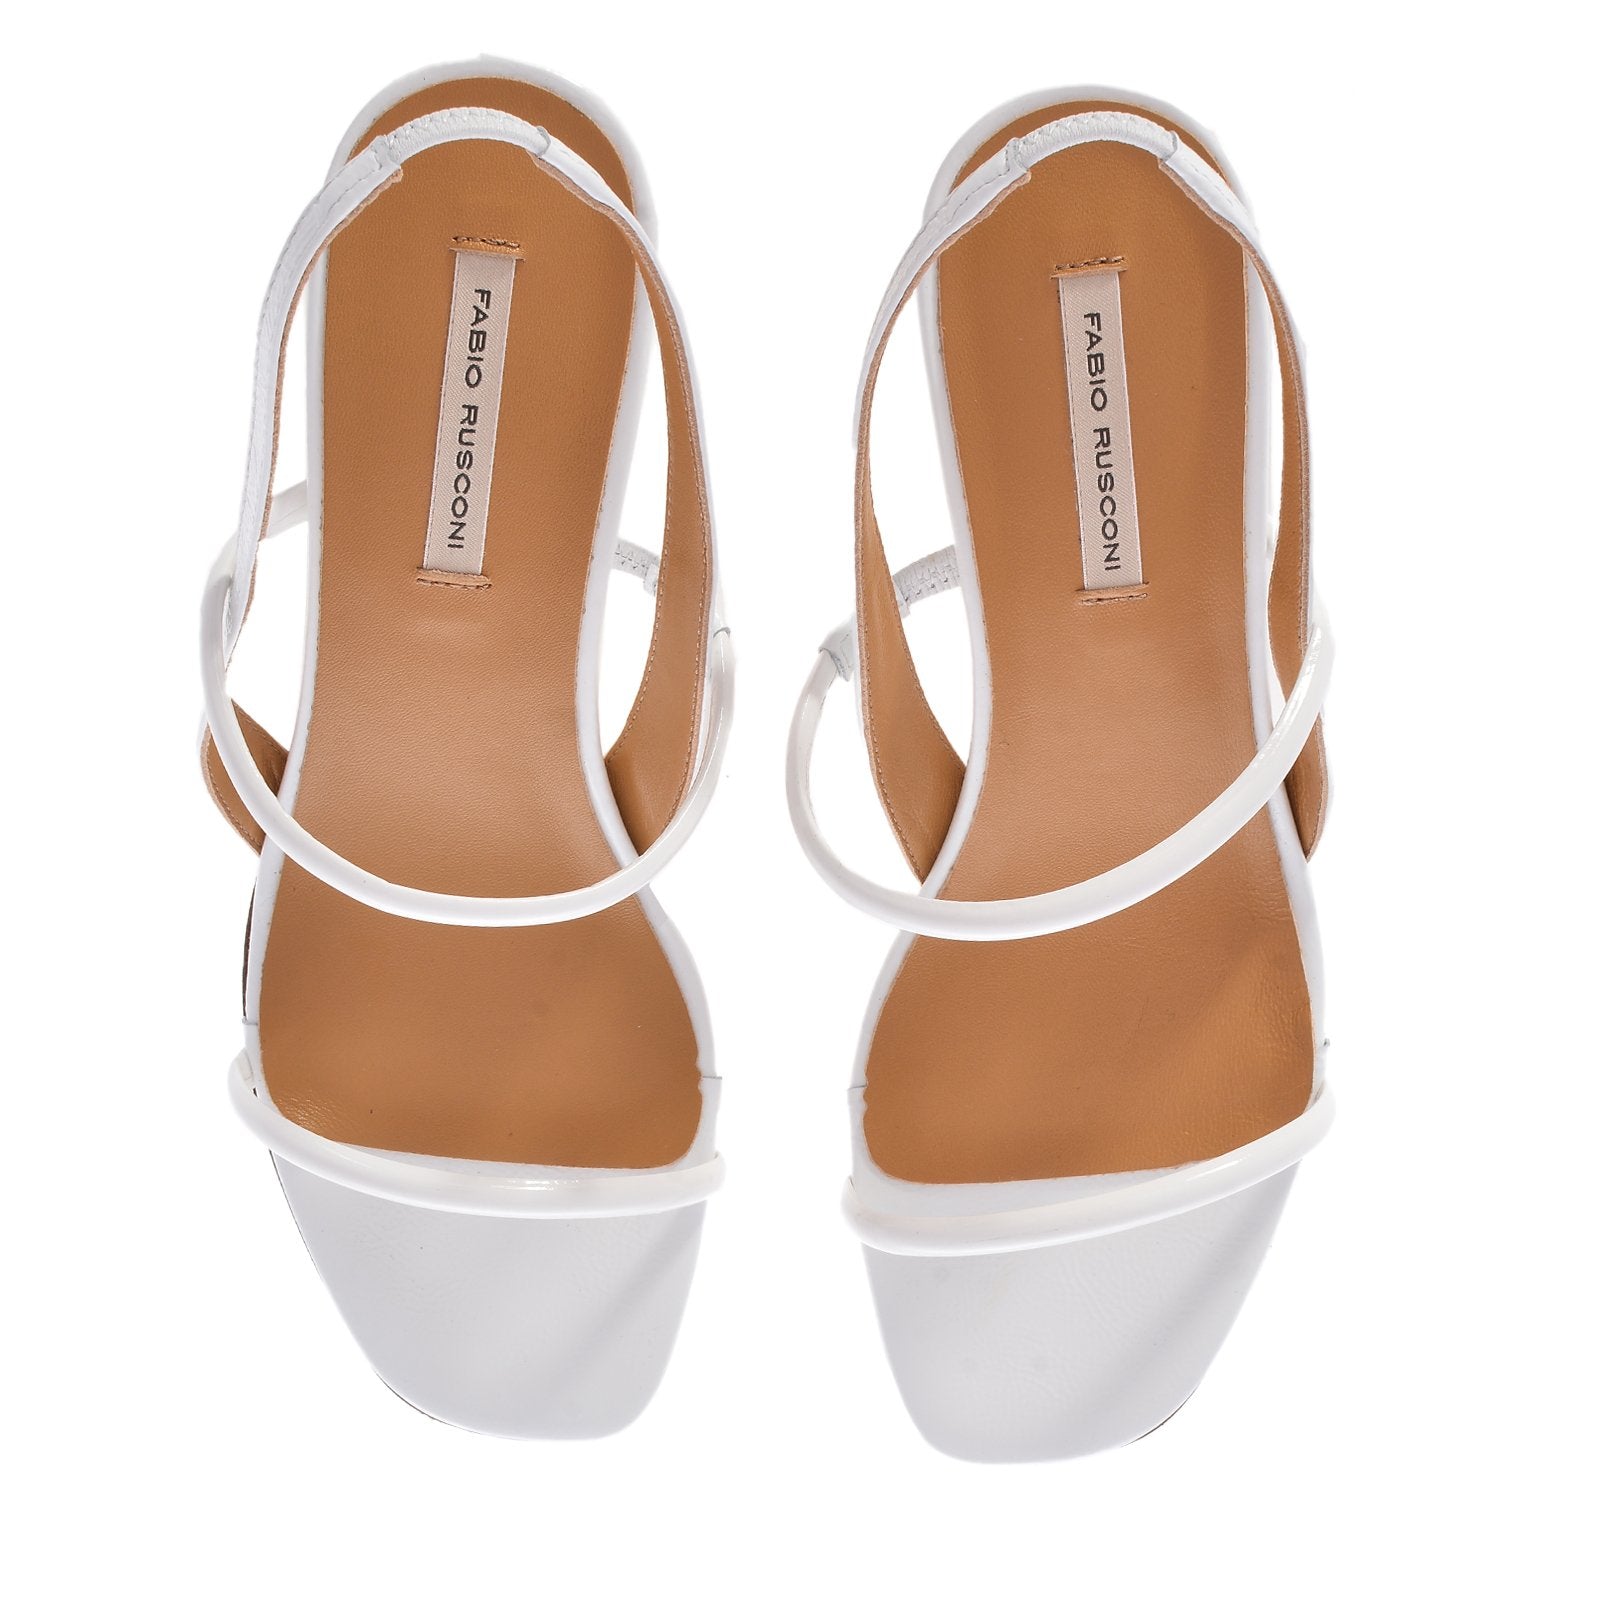 Iside White Naplack Leather Sandals BIANCO0100 - 4